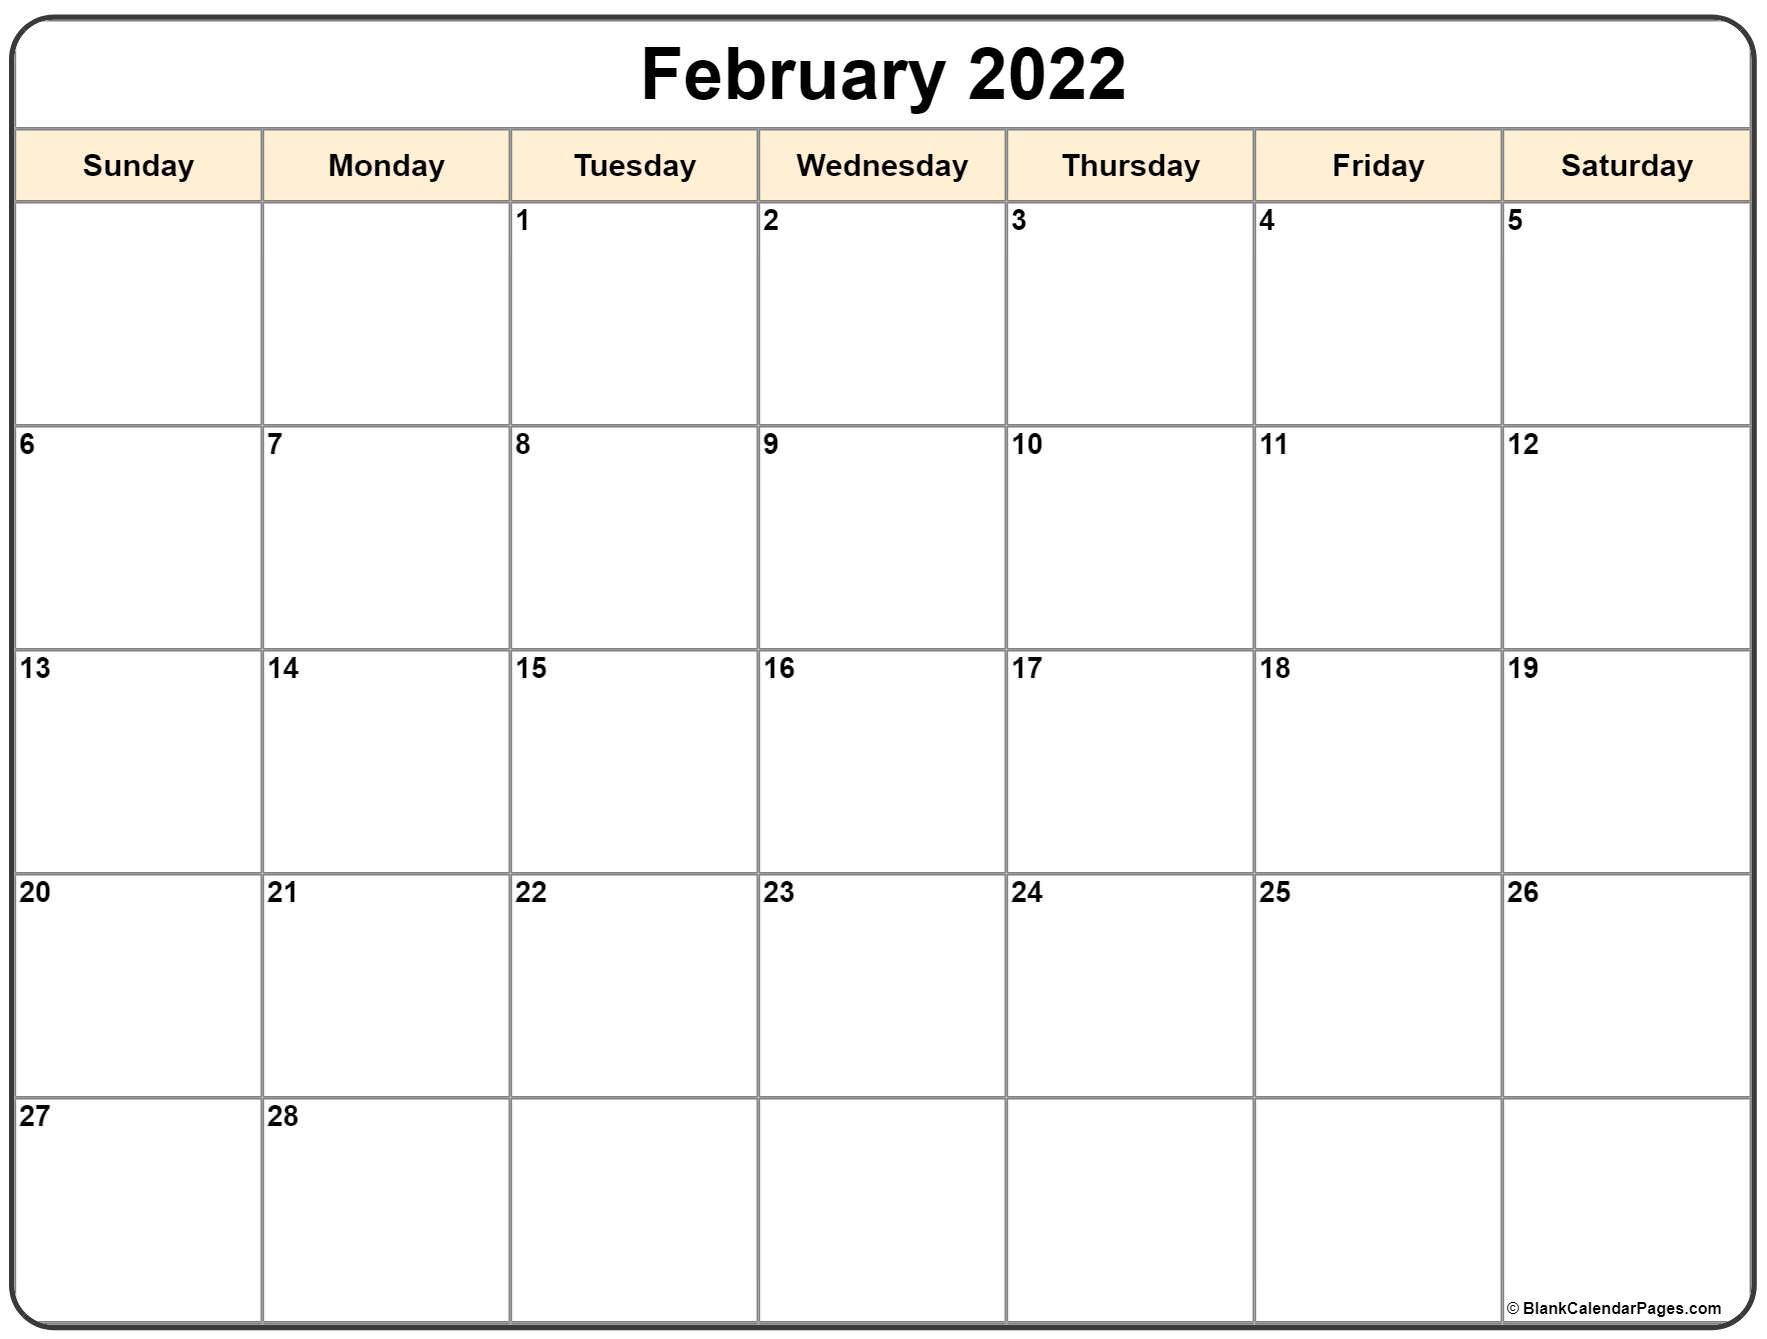 February 2022 Calendar | Free Printable Monthly Calendars